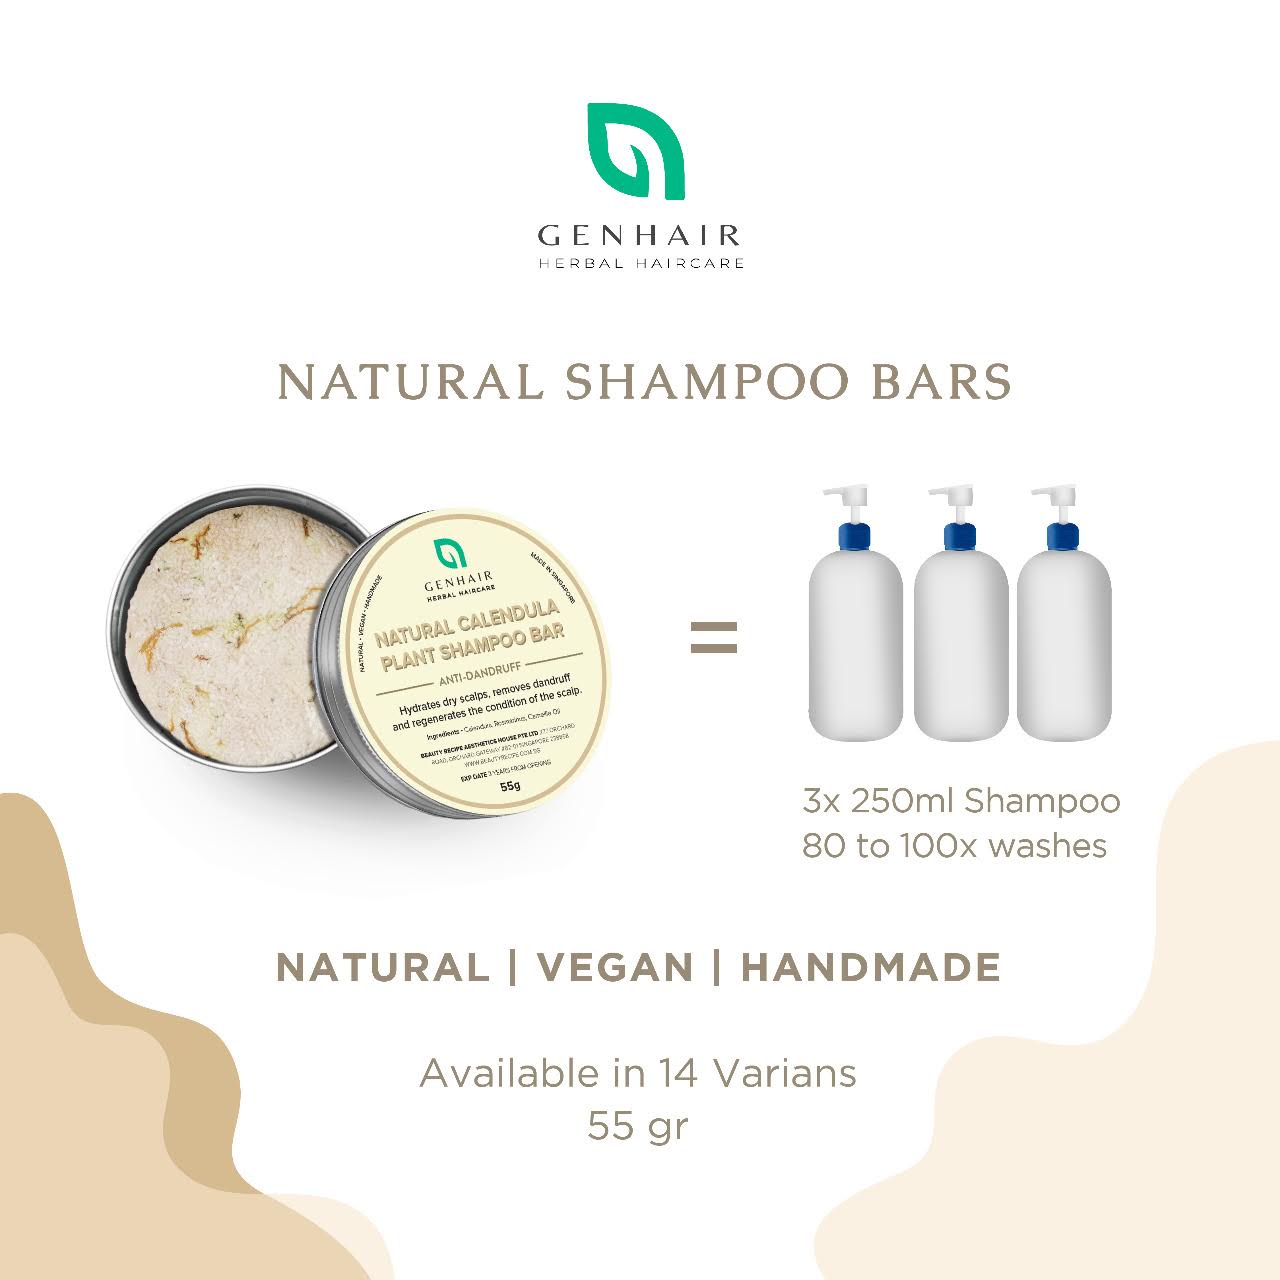 Natural Seaweed Shampoo Bar - Anti Dryness